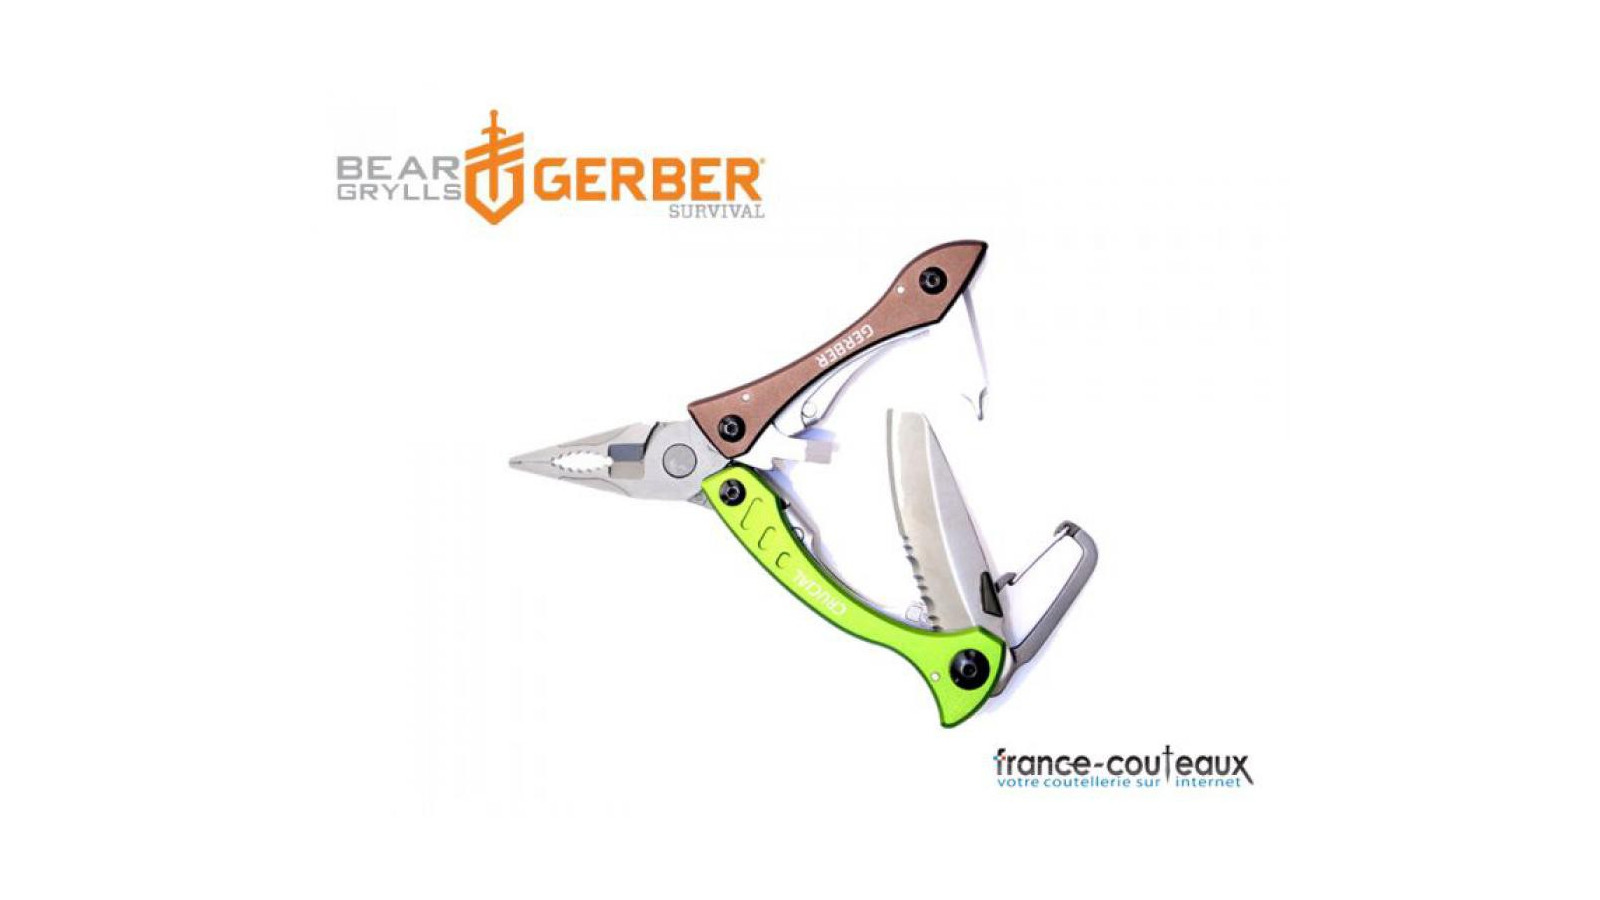 Pince Gerber Crucial Pocket Tool multifonctions 9 outils vert et marron